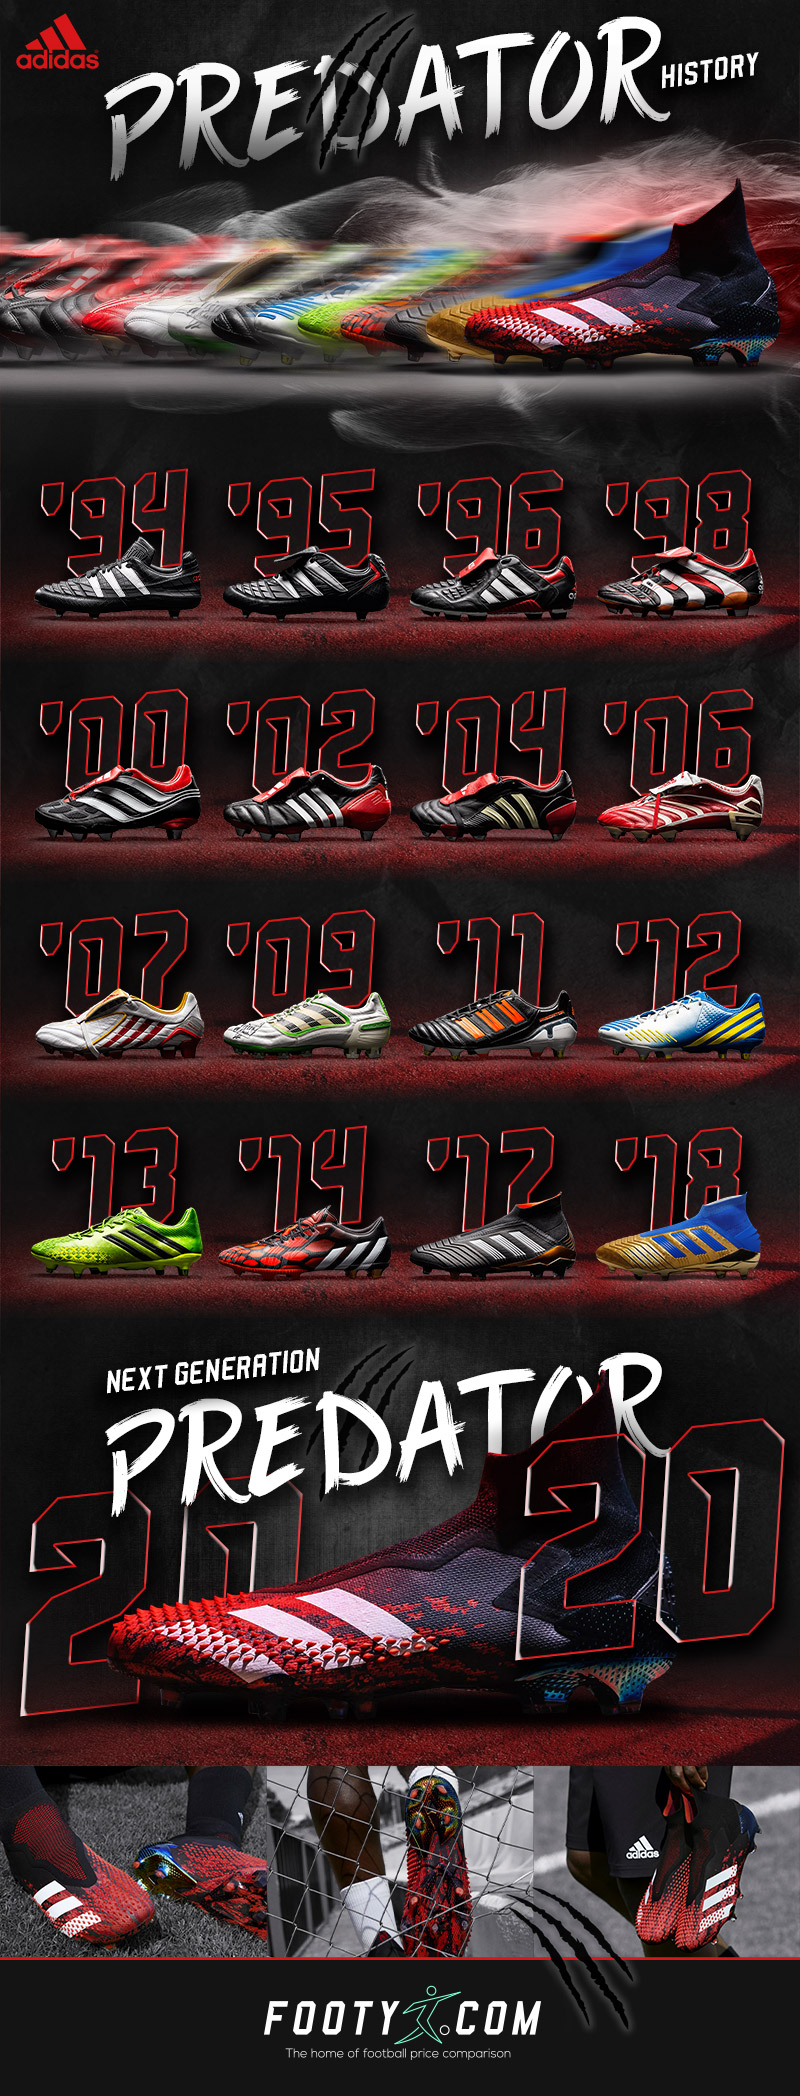 adidas predator over the years